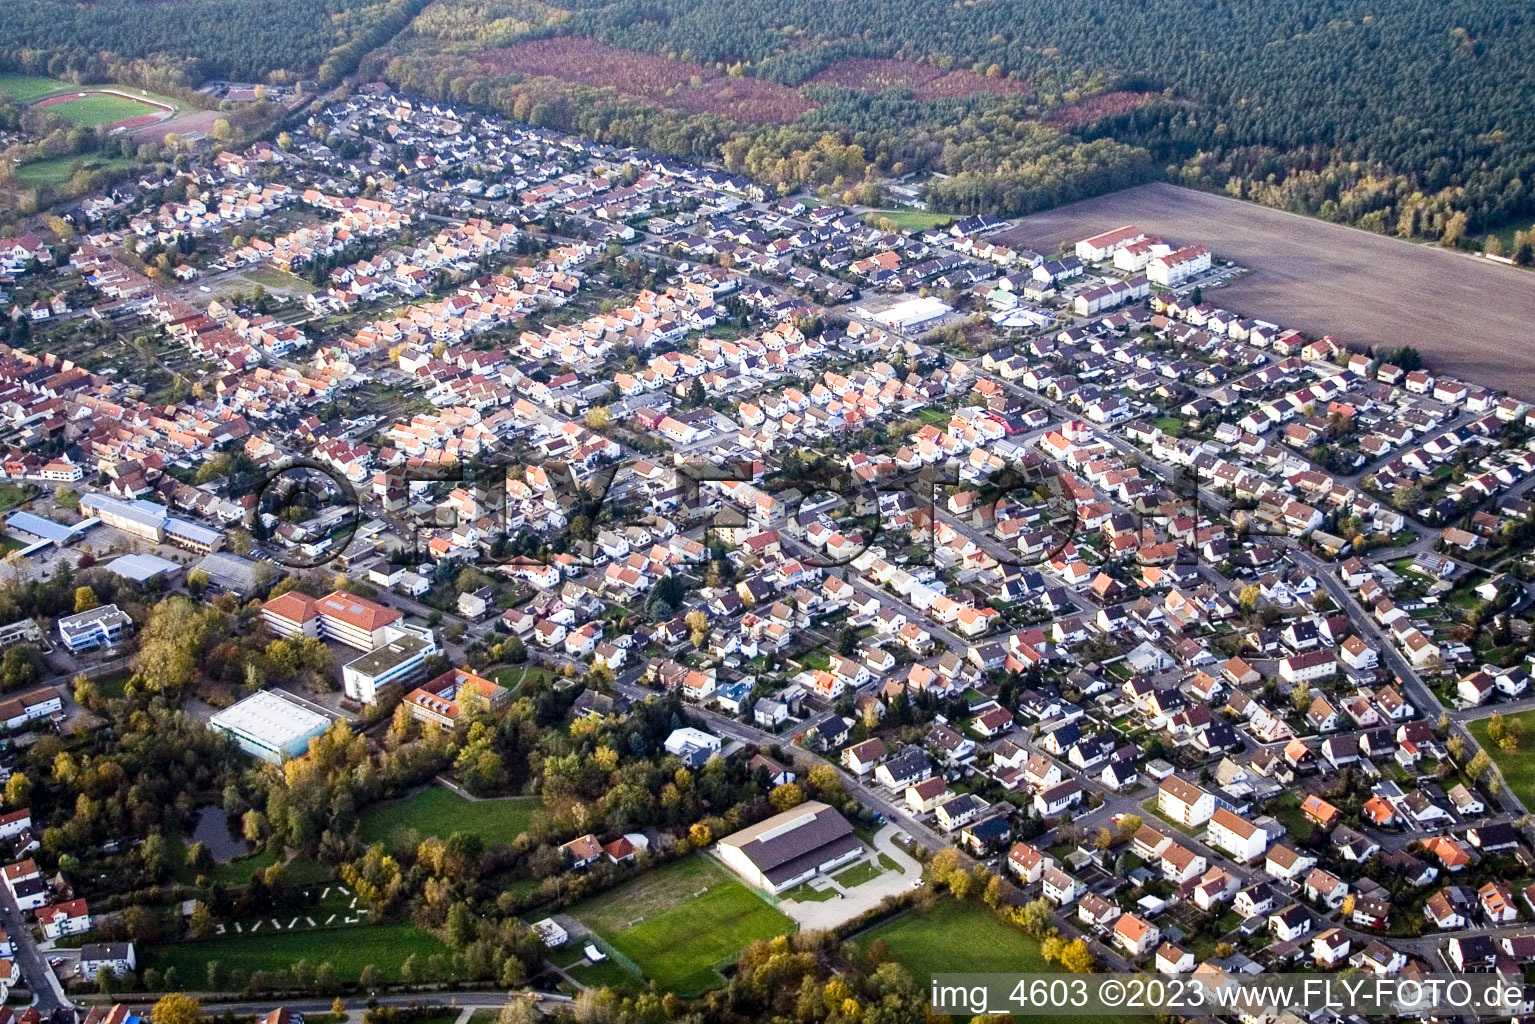 Aerial view of Postgrabenstr in Bellheim in the state Rhineland-Palatinate, Germany